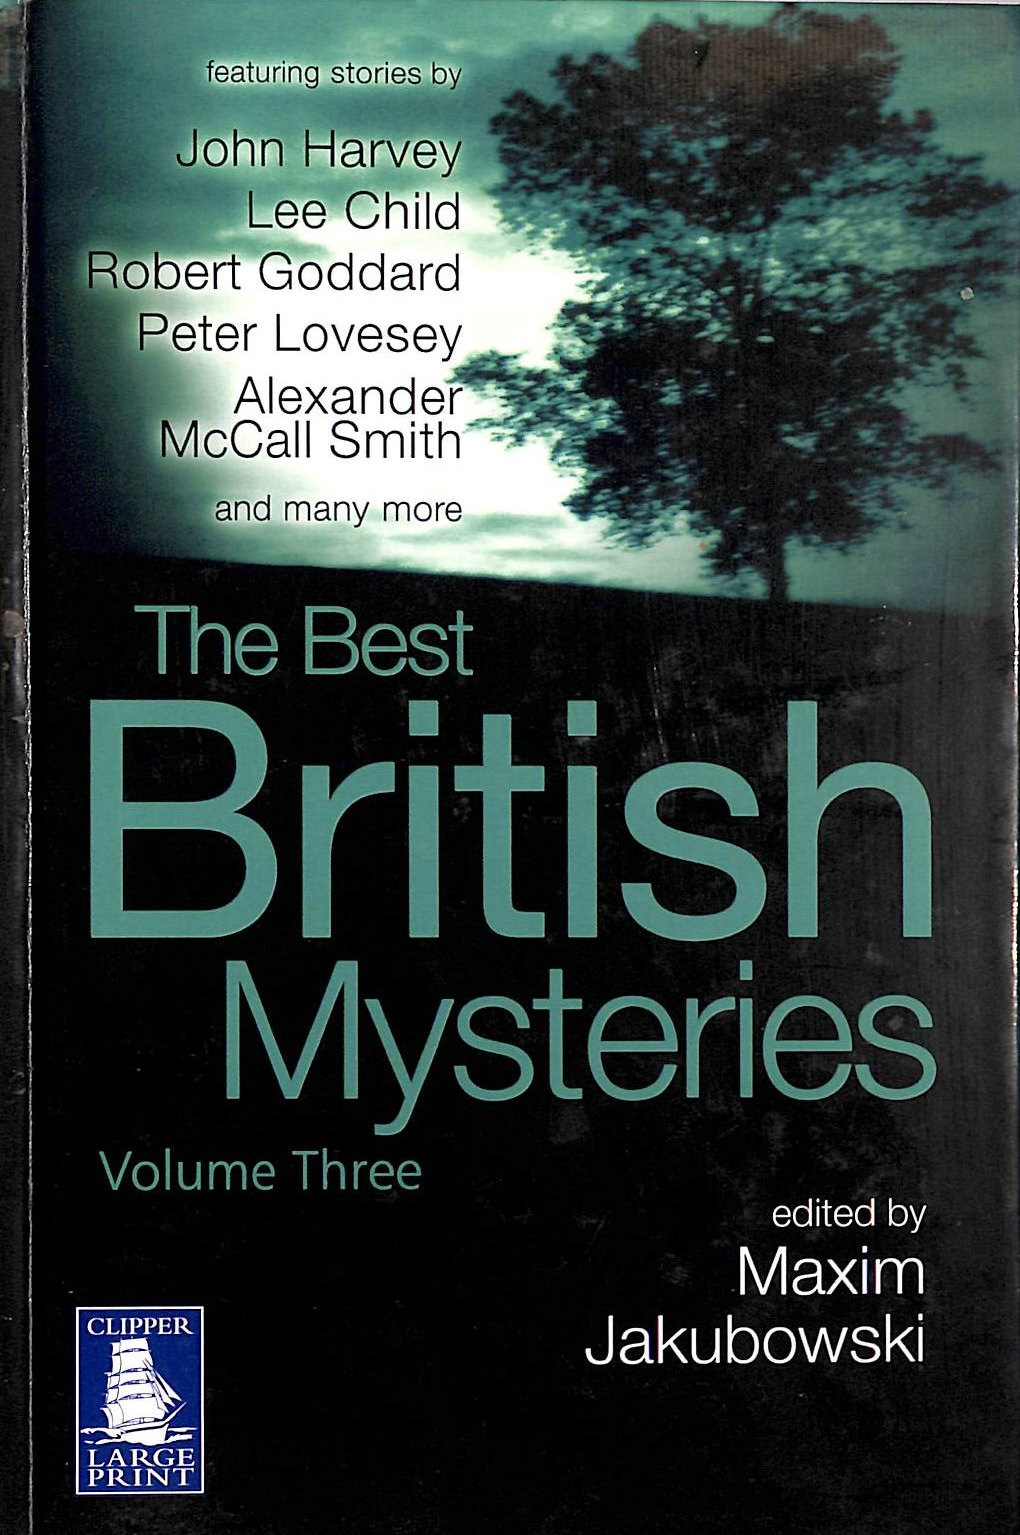 LEE CHILD, ALEXANDER MCCALL SMITH, ET AL - The Best British Mysteries III [Large Print]